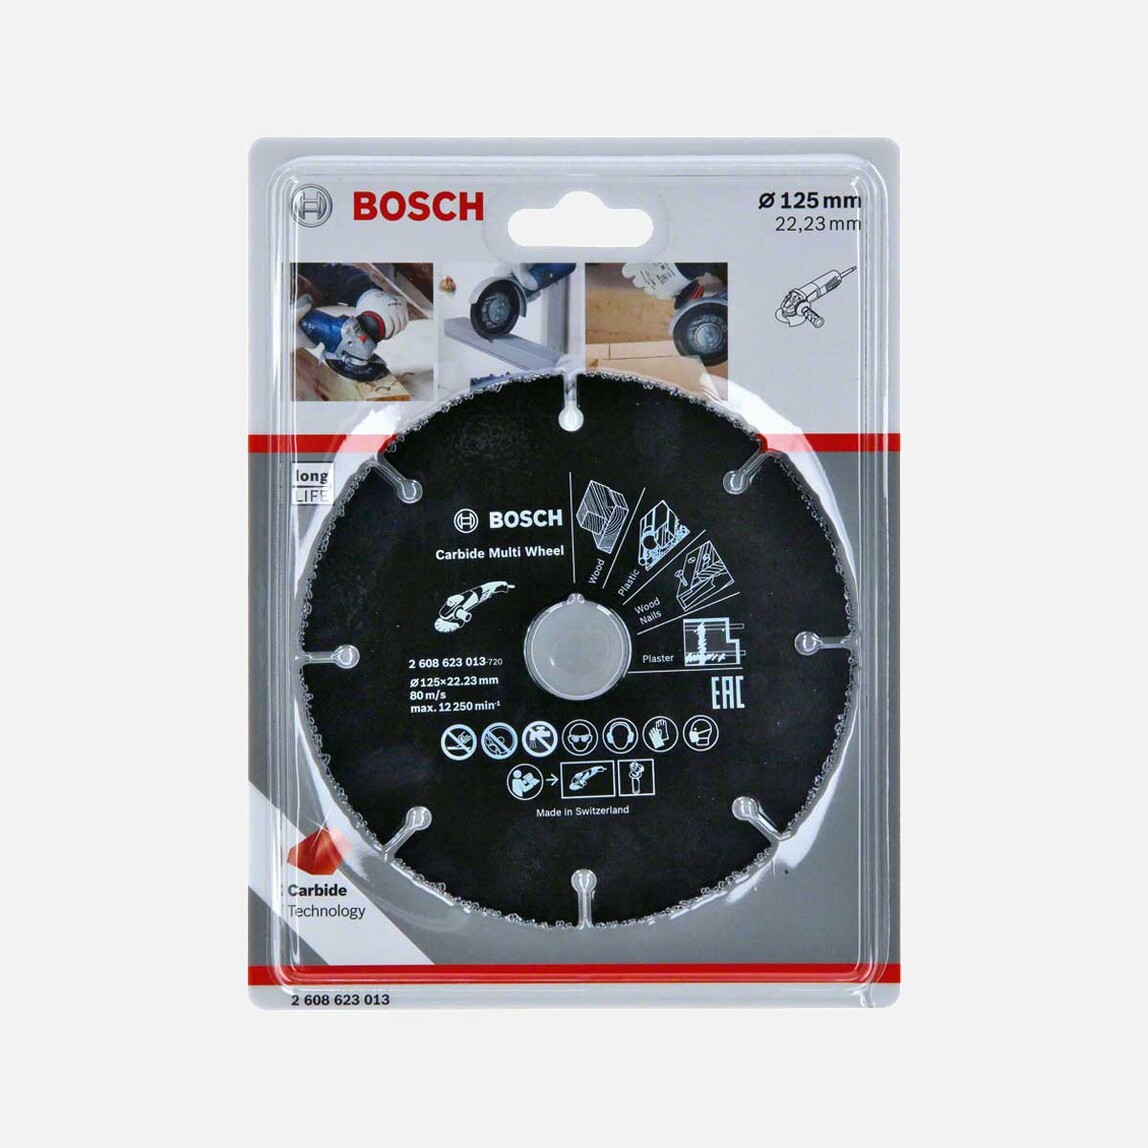    Bosch Carbide Multiwheel 125 mm  